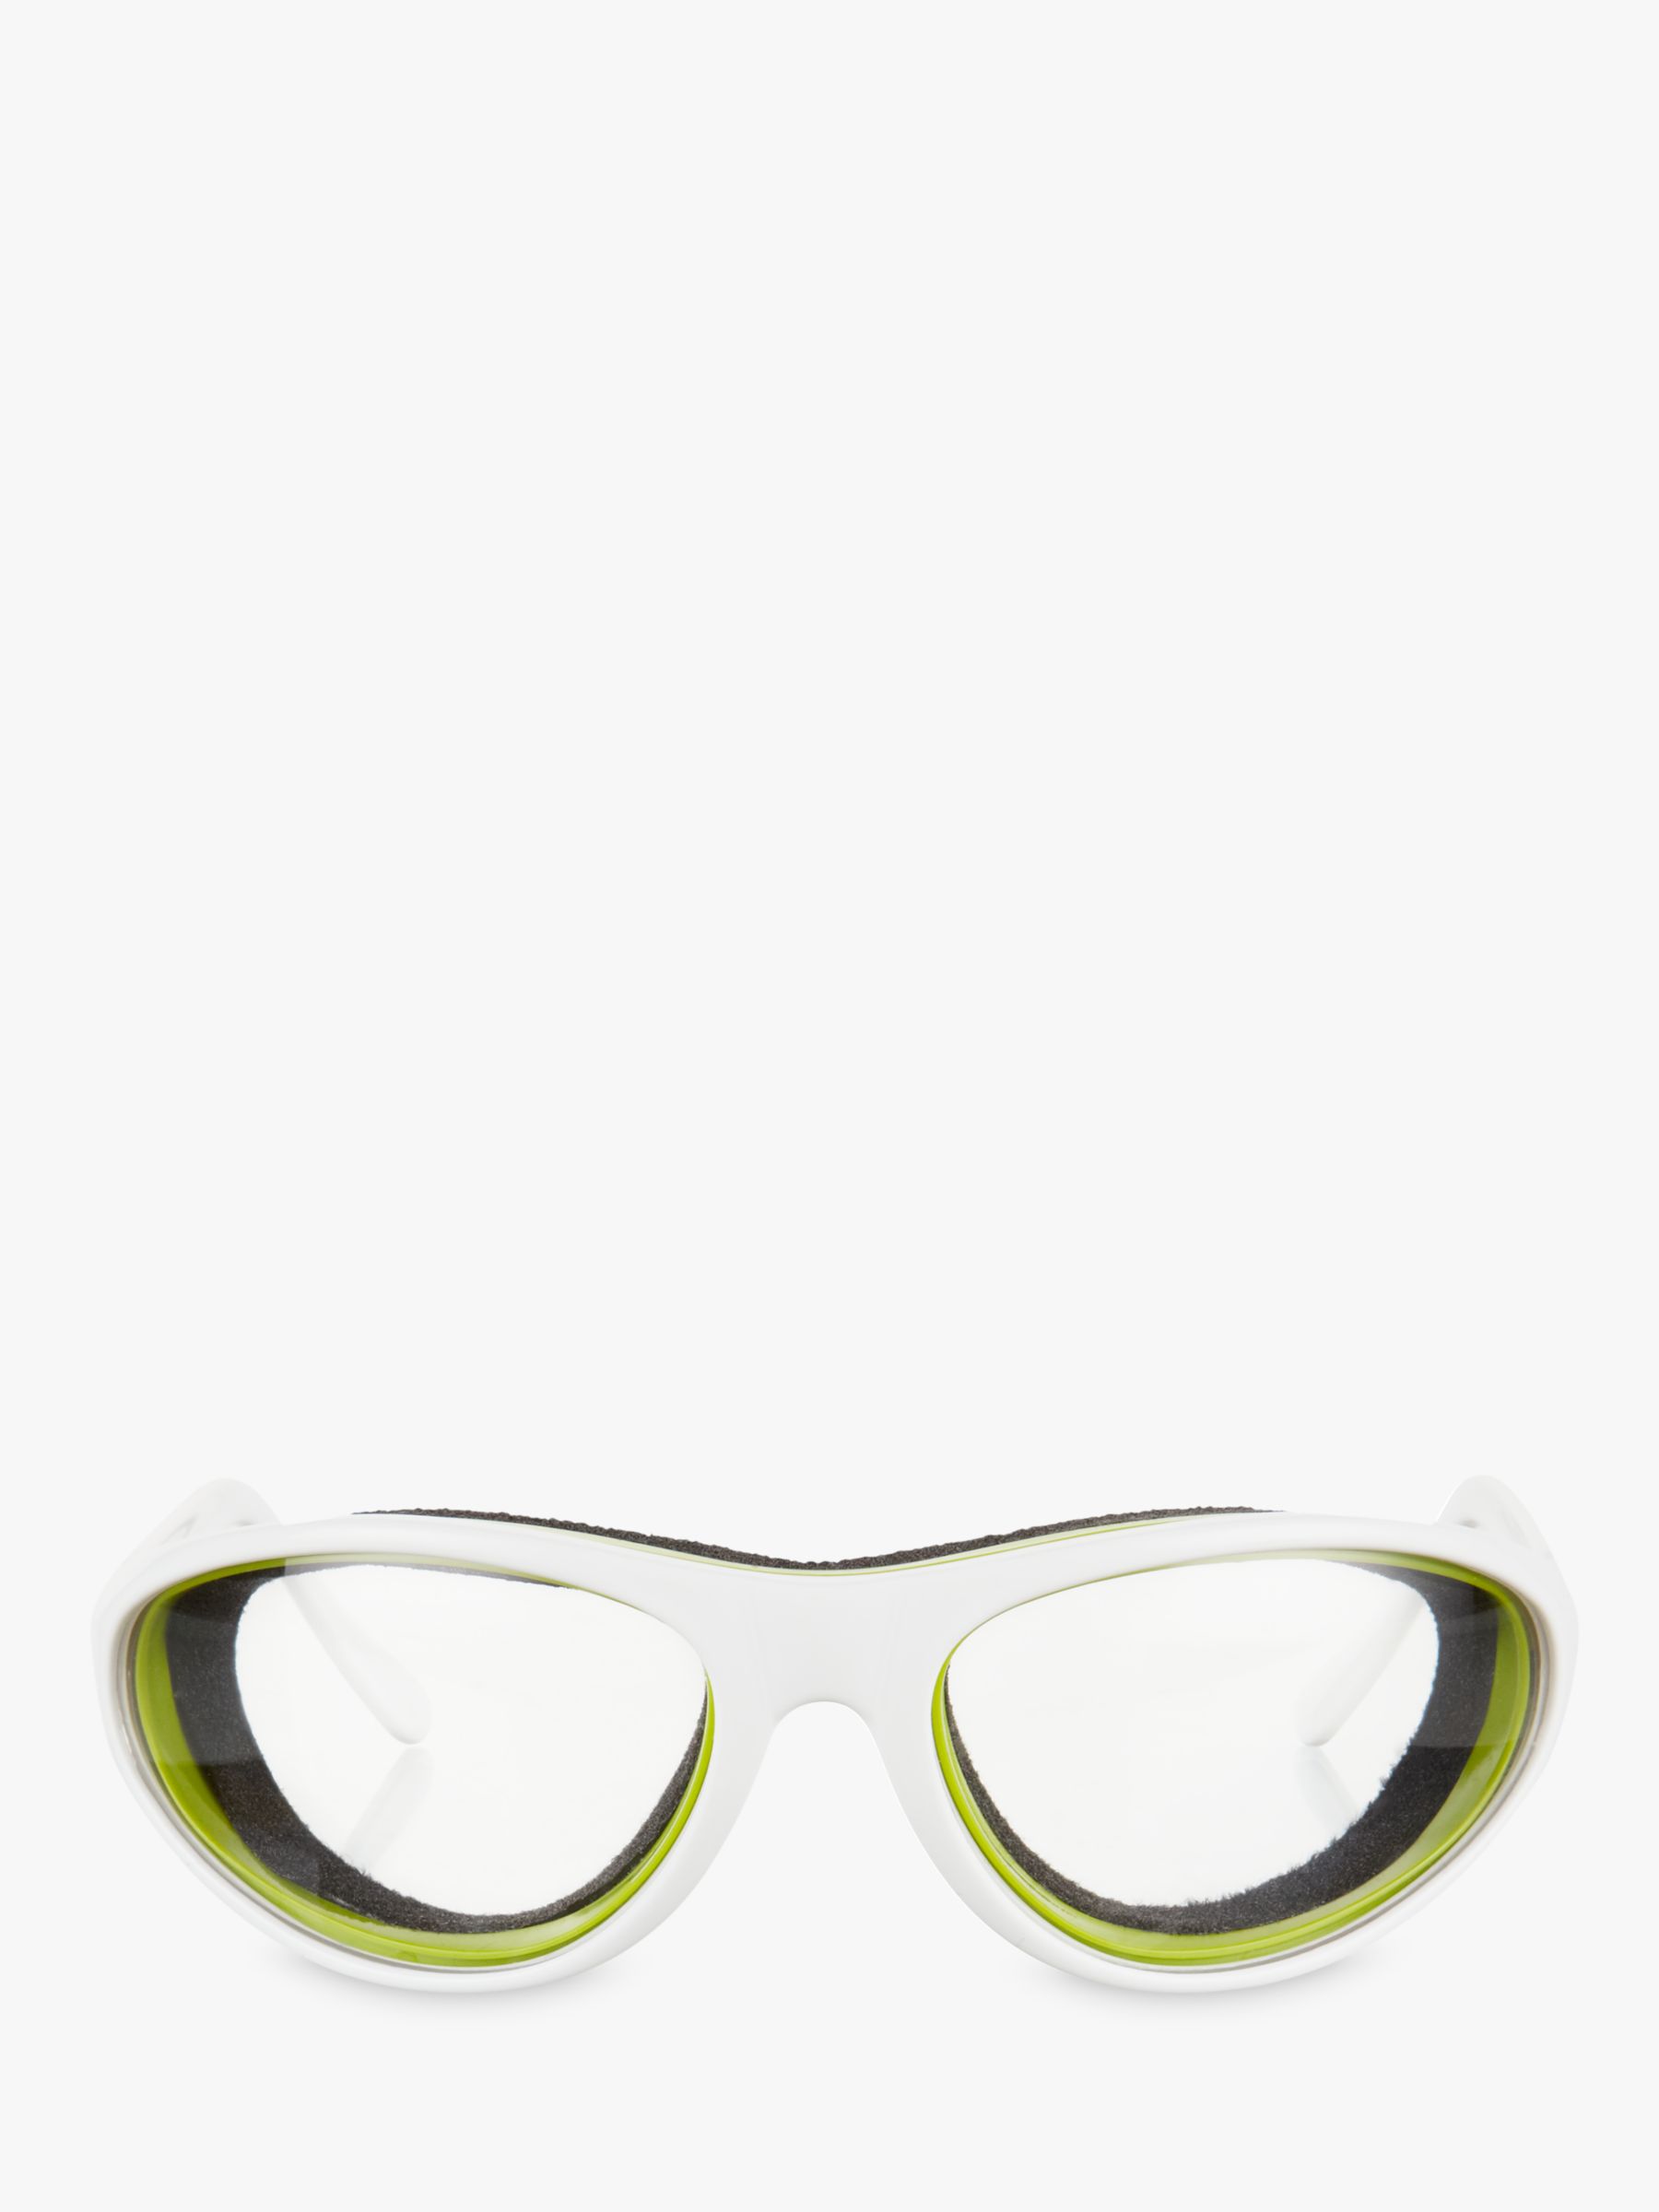 Onion Goggles Anti Tear EyeWear Cutting Chopping Eye Protect Glass Tool